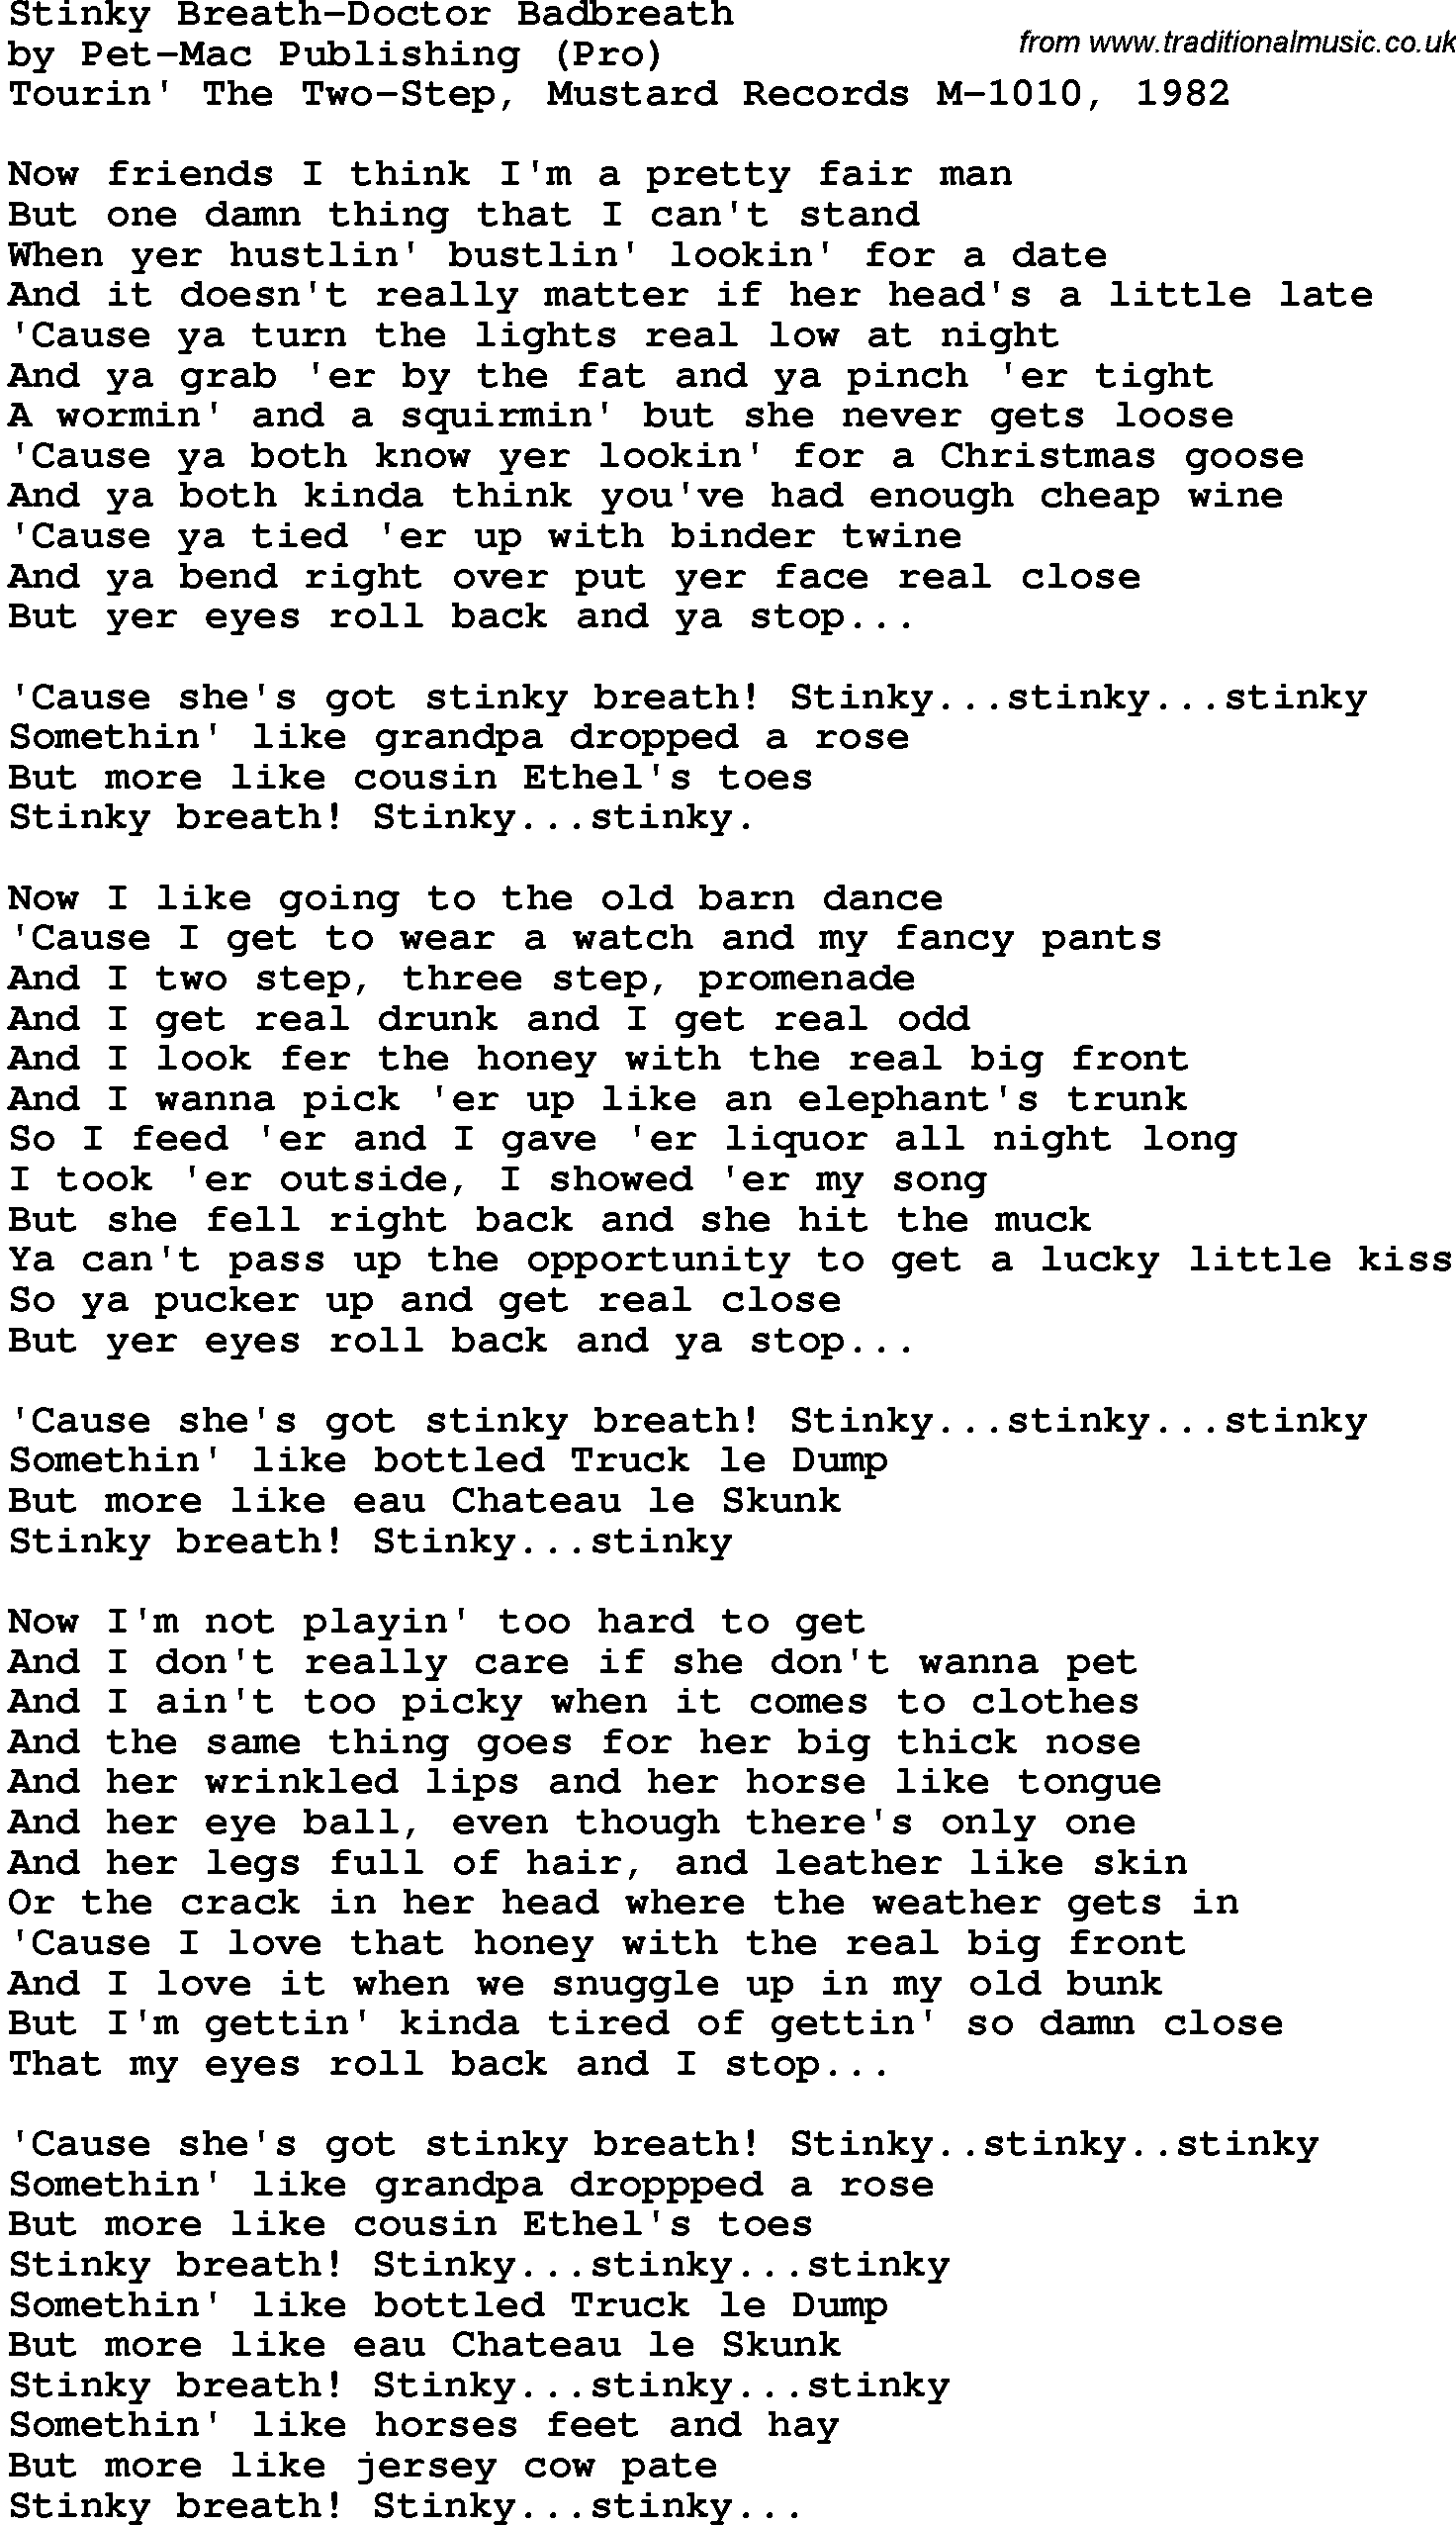 Novelty song: Stinky Breath-Doctor Badbreath lyrics